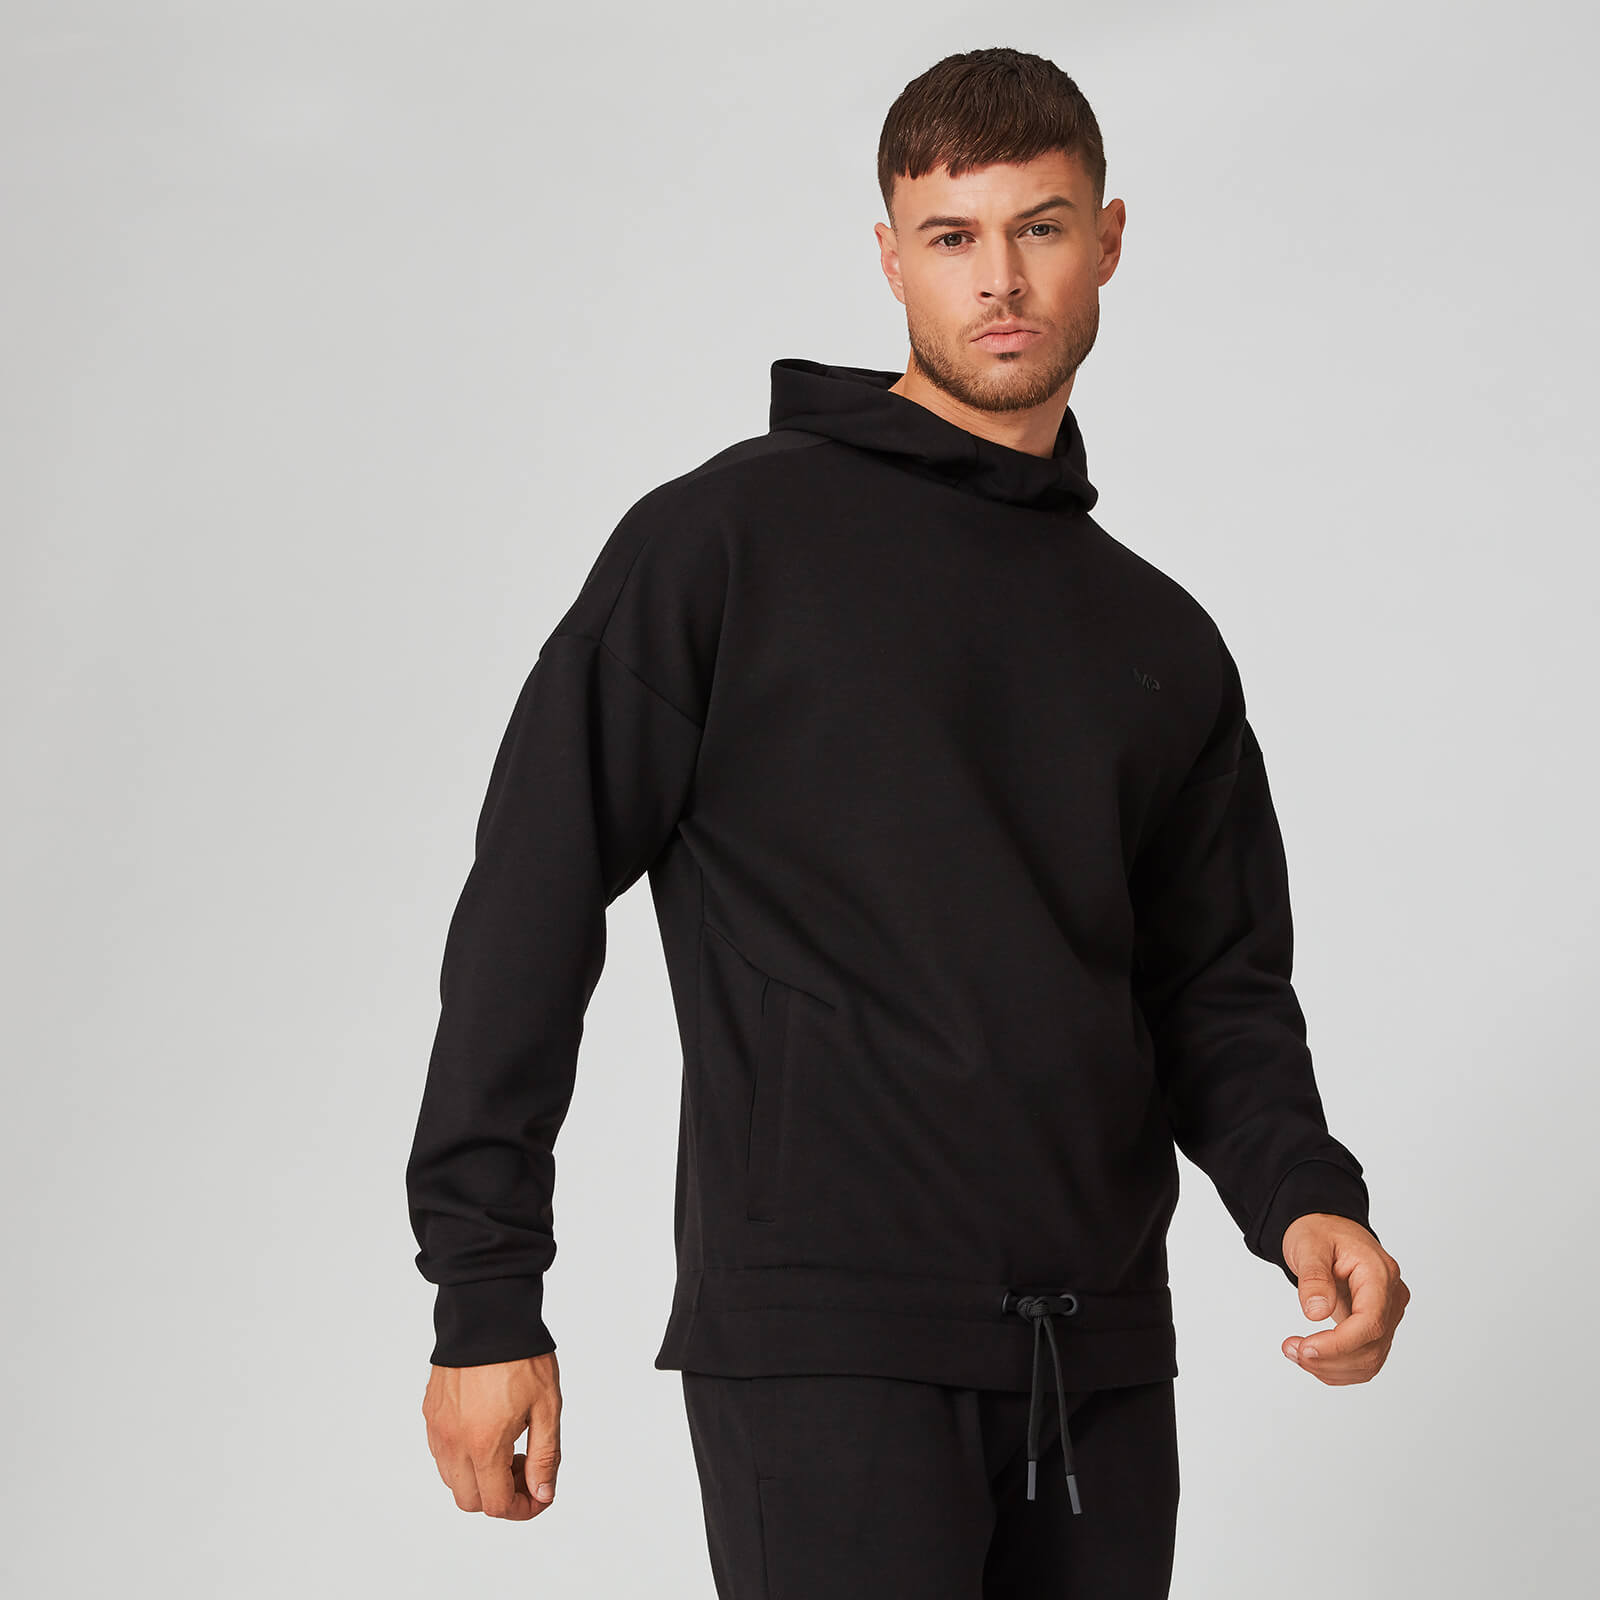 Form Pro Pullover majica s kapuljačom - Crna - XS